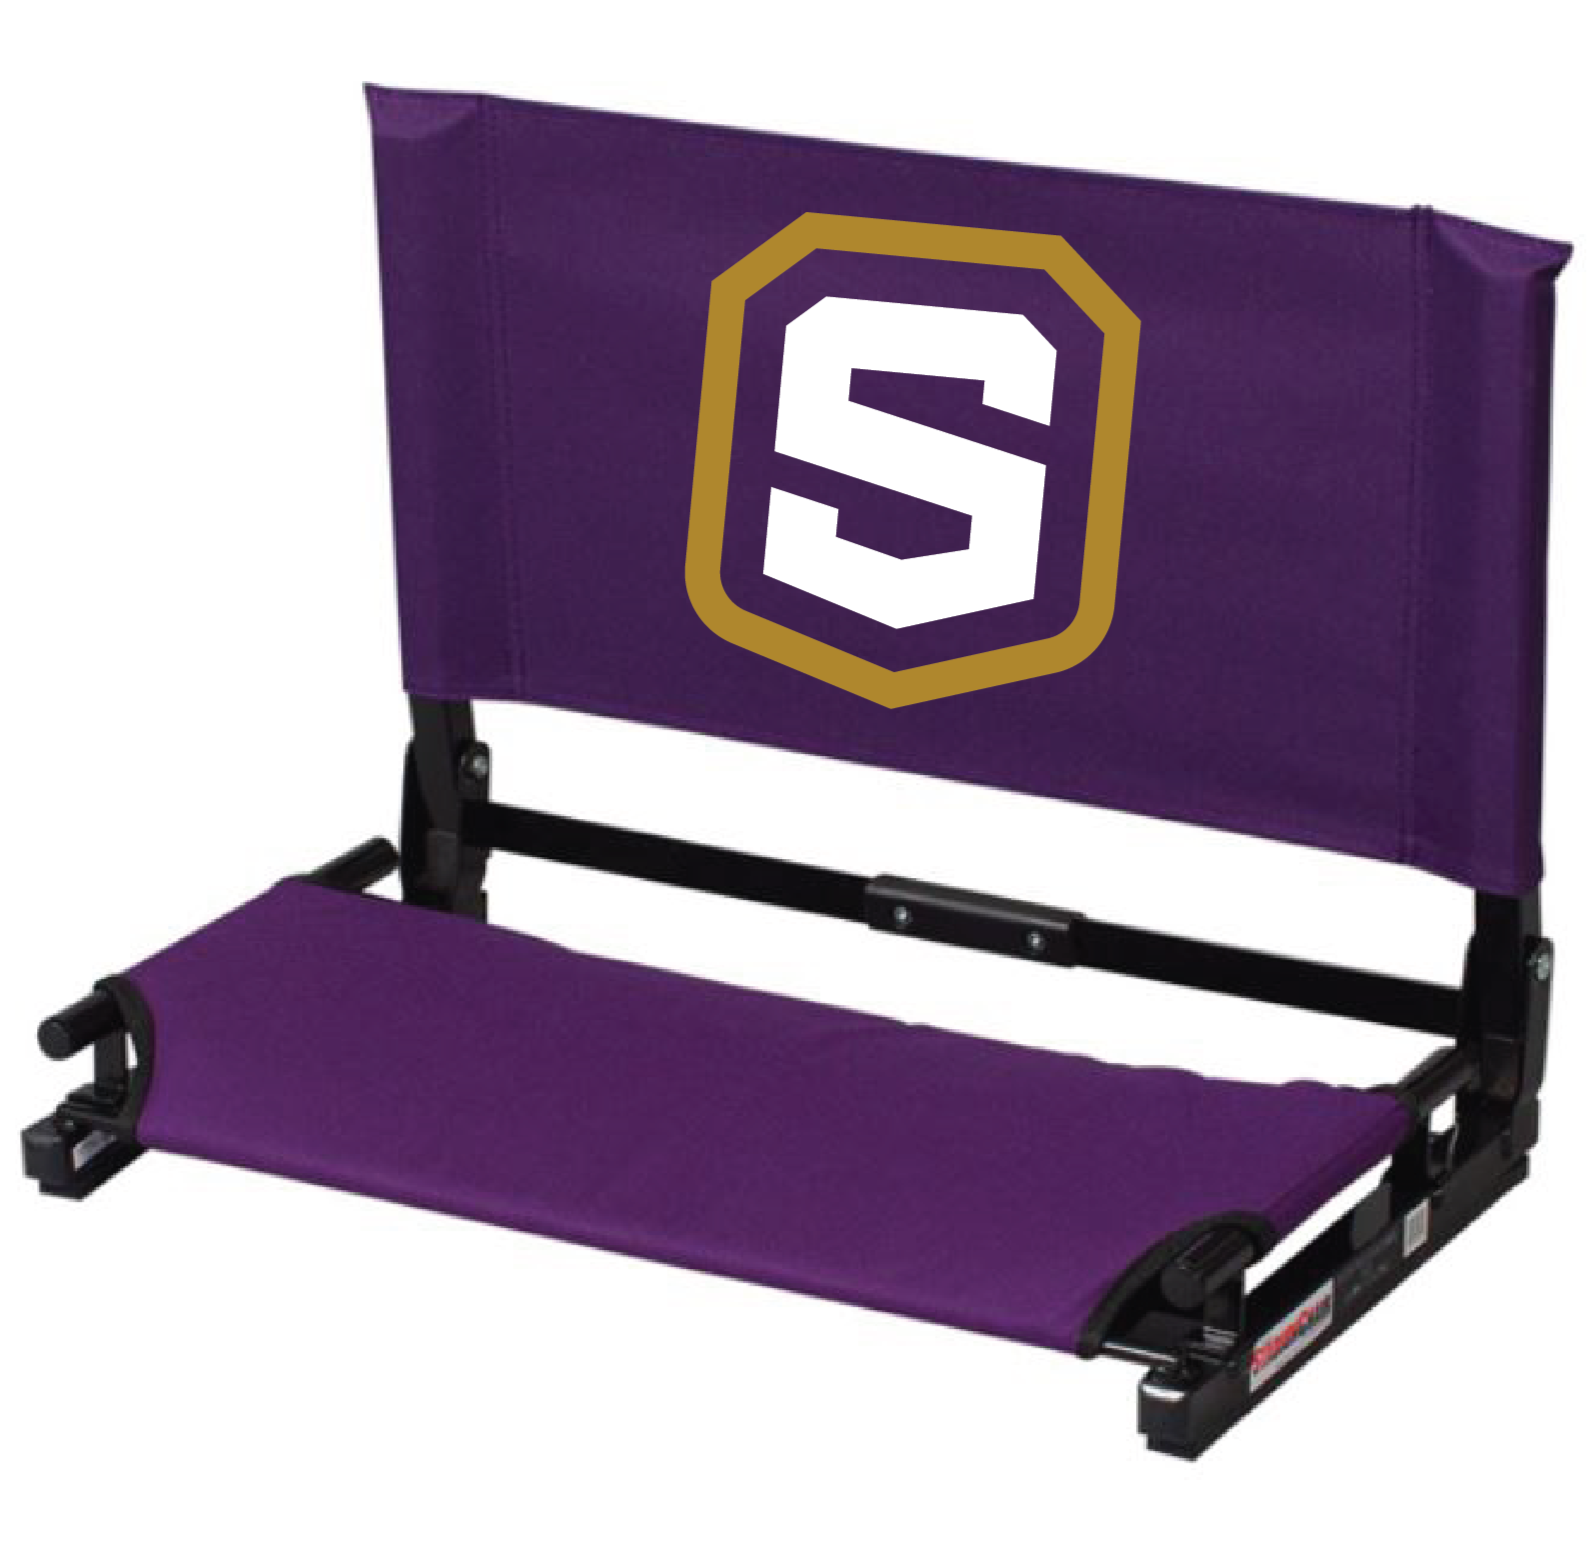 Spencer Tigers Stadium Chair